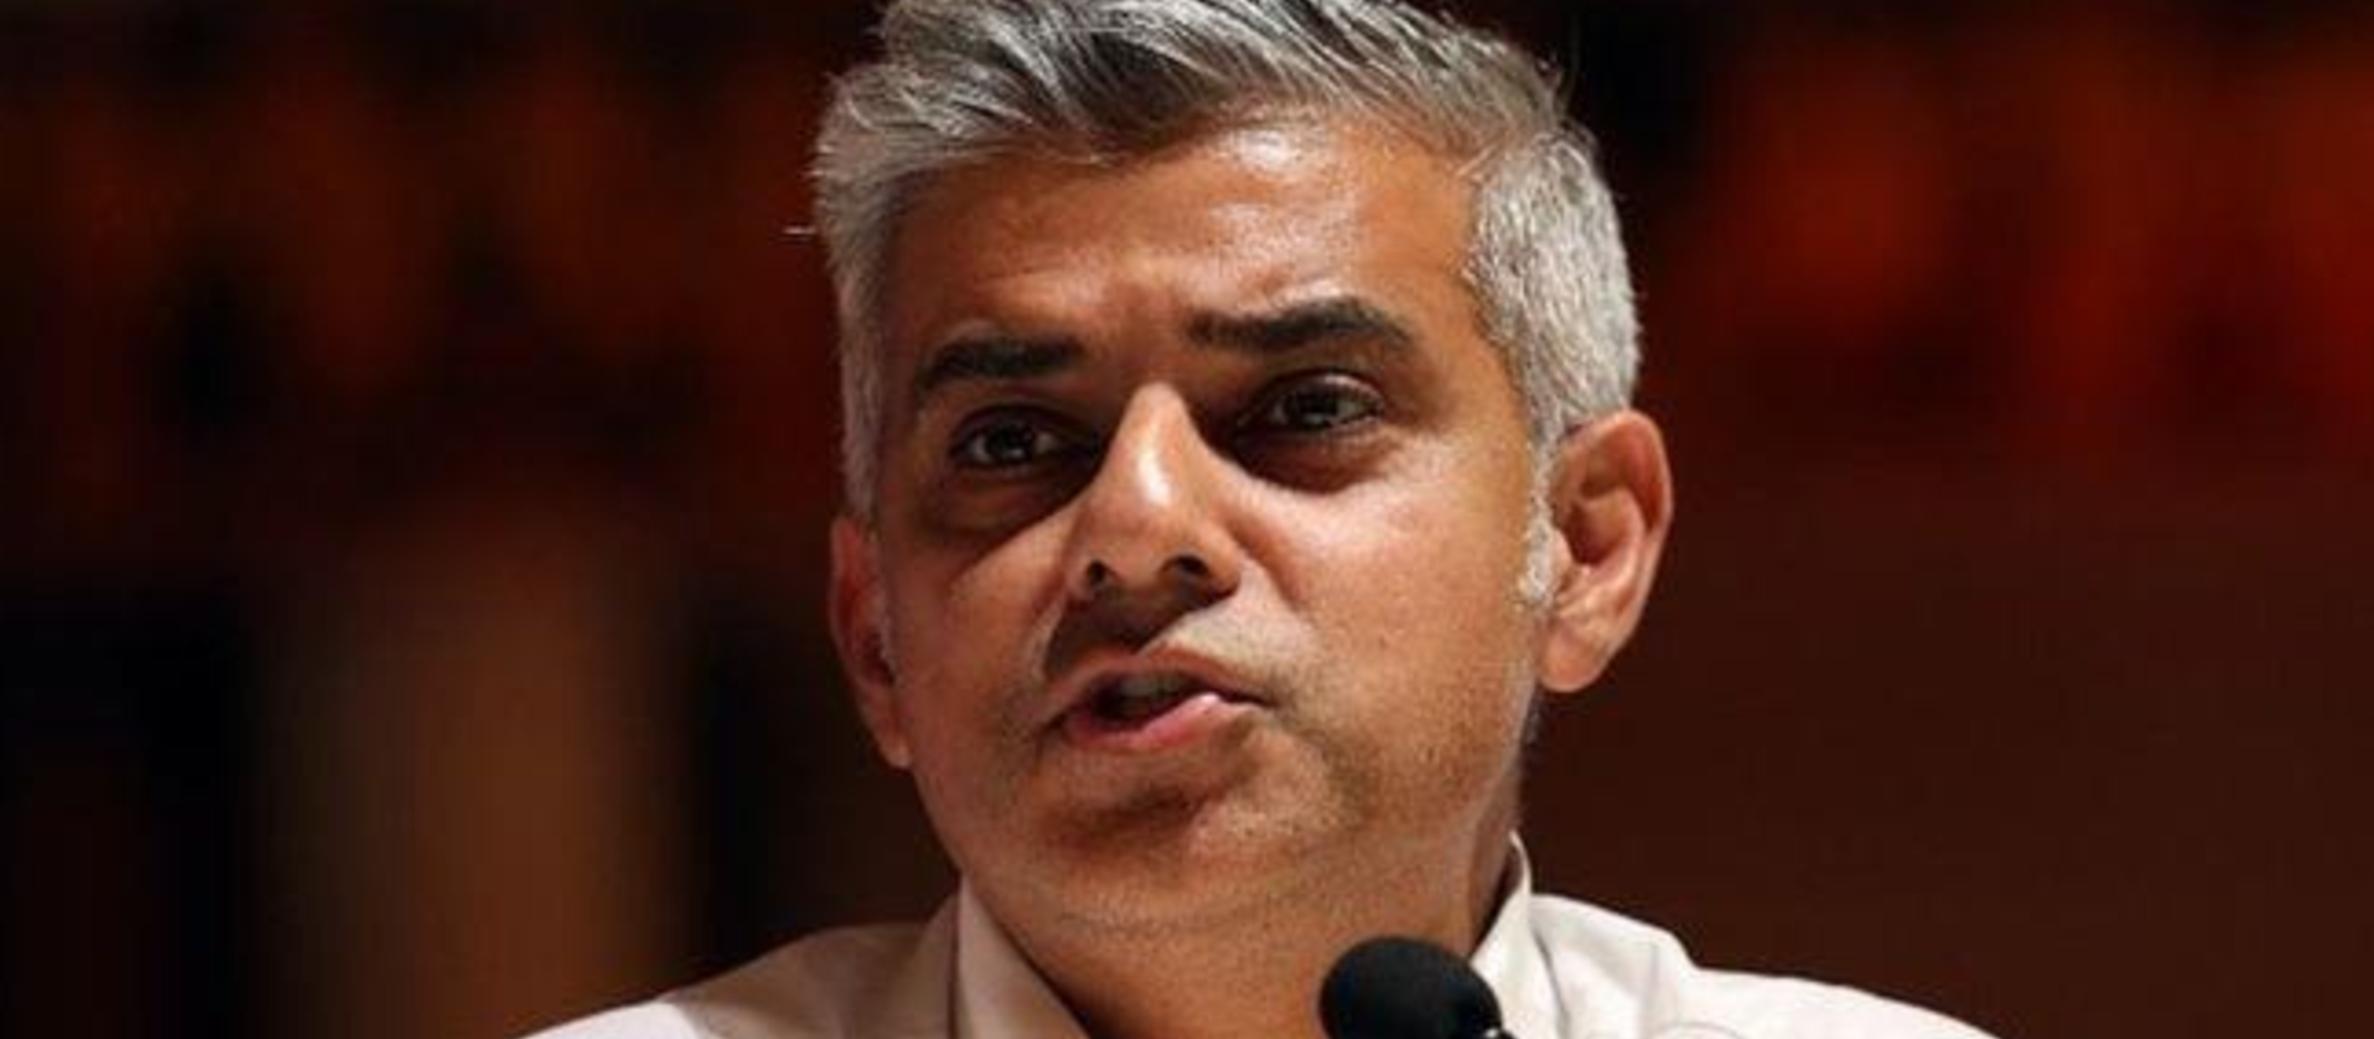 London Mayor to hold ‘urgent’ police talks with Jewish neighborhood over ‘antisemitic attacks’